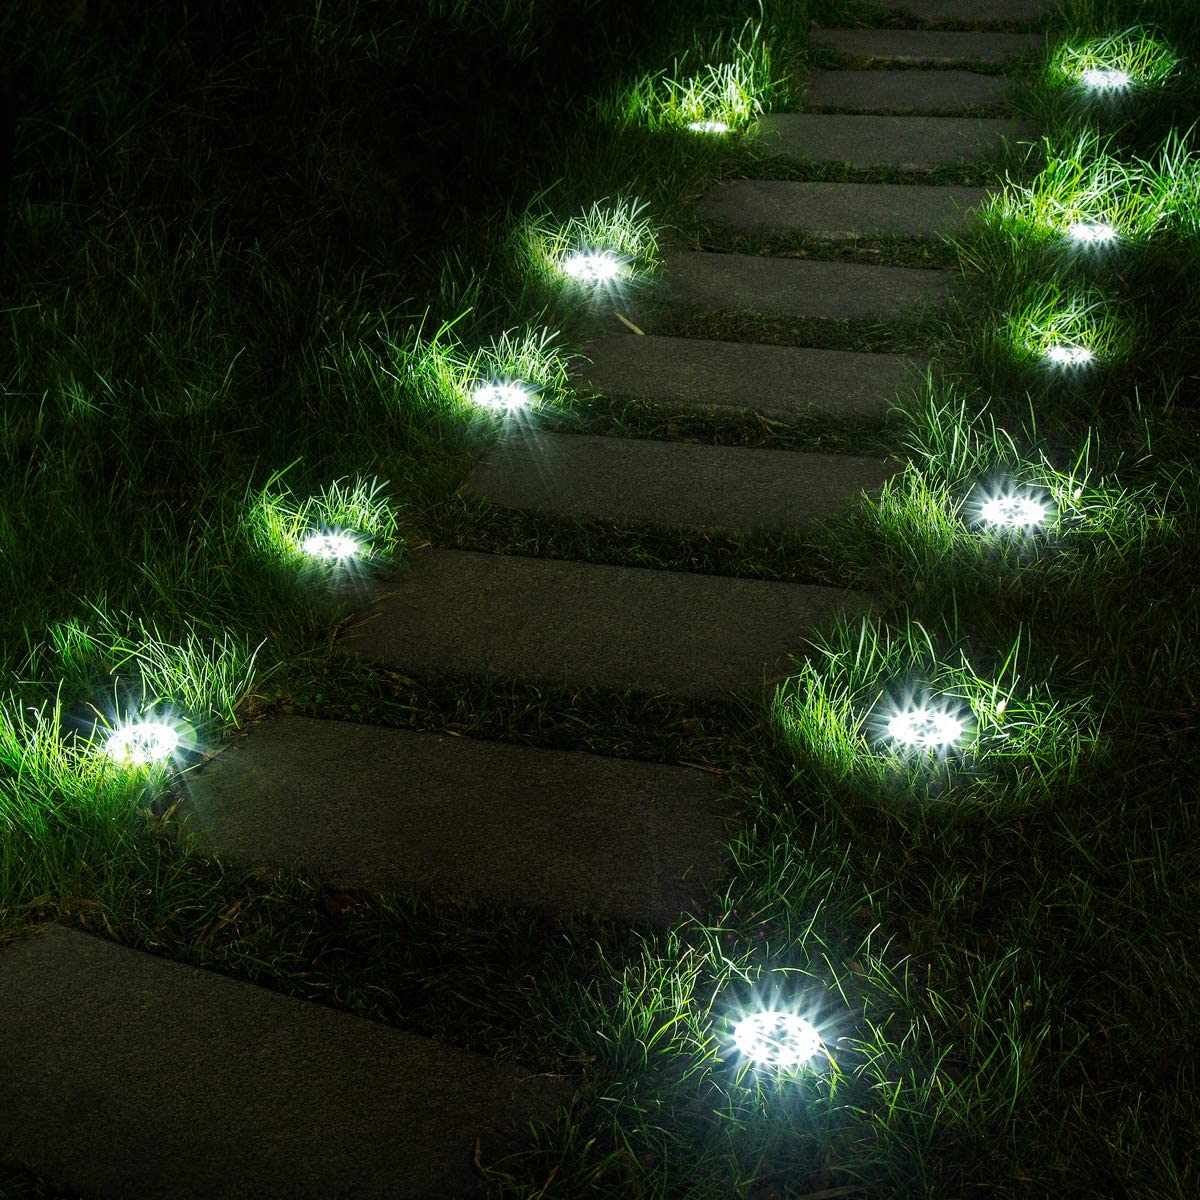 Solpex 12 piece solar ground light 8 LED solar disc lights outdoor waterproof garden landscape